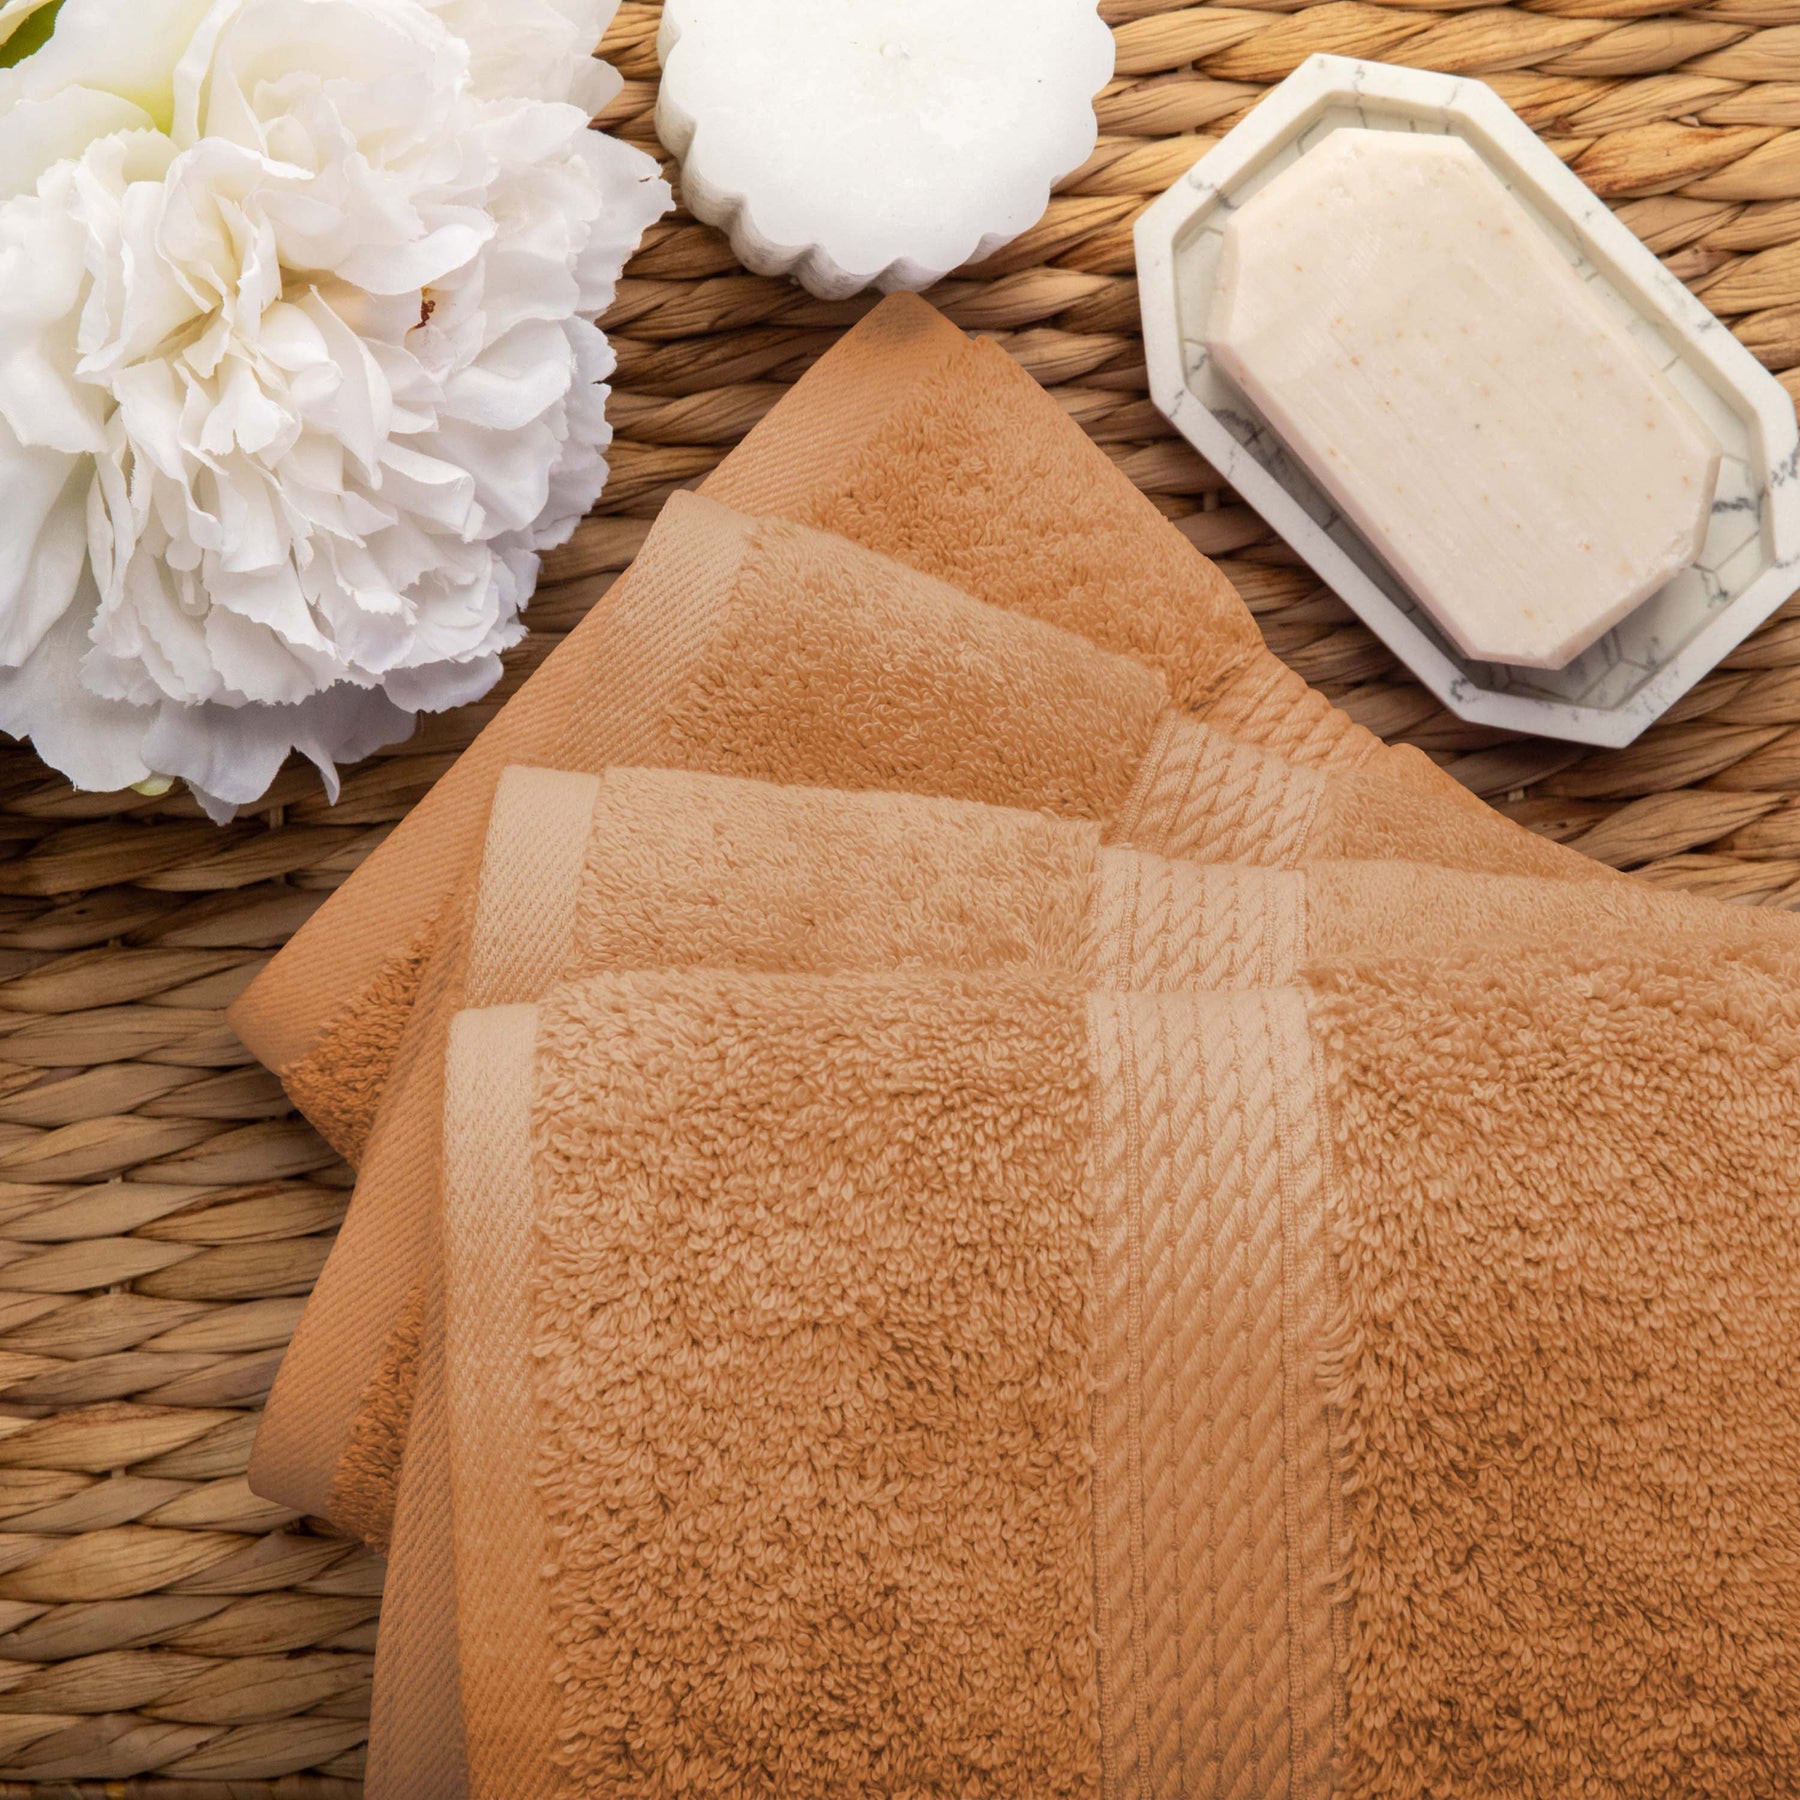 Superior Egyptian Cotton Plush Heavyweight Absorbent Luxury Soft 9-Piece Towel Set - Rust